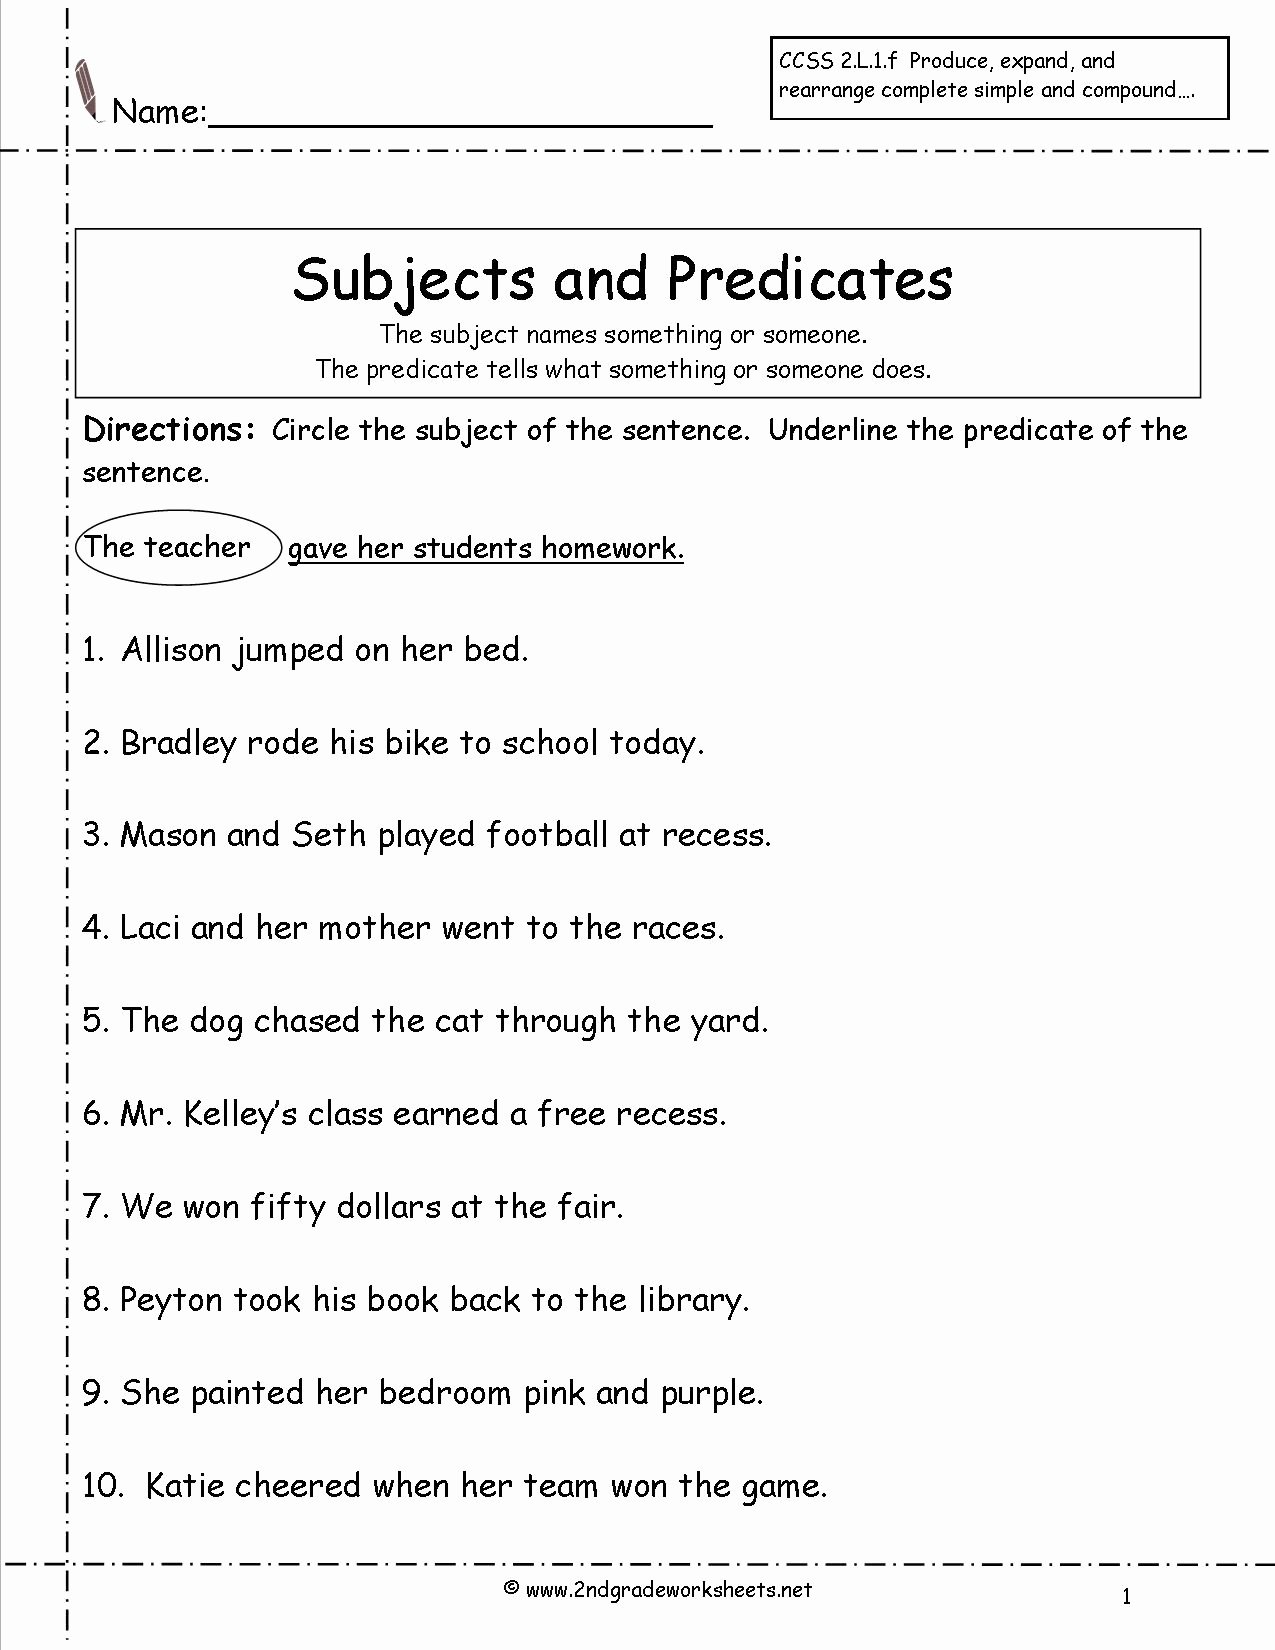 Subject and Predicate Worksheet Fresh Second Grade Sentences Worksheets Ccss 2 L 1 F Worksheets